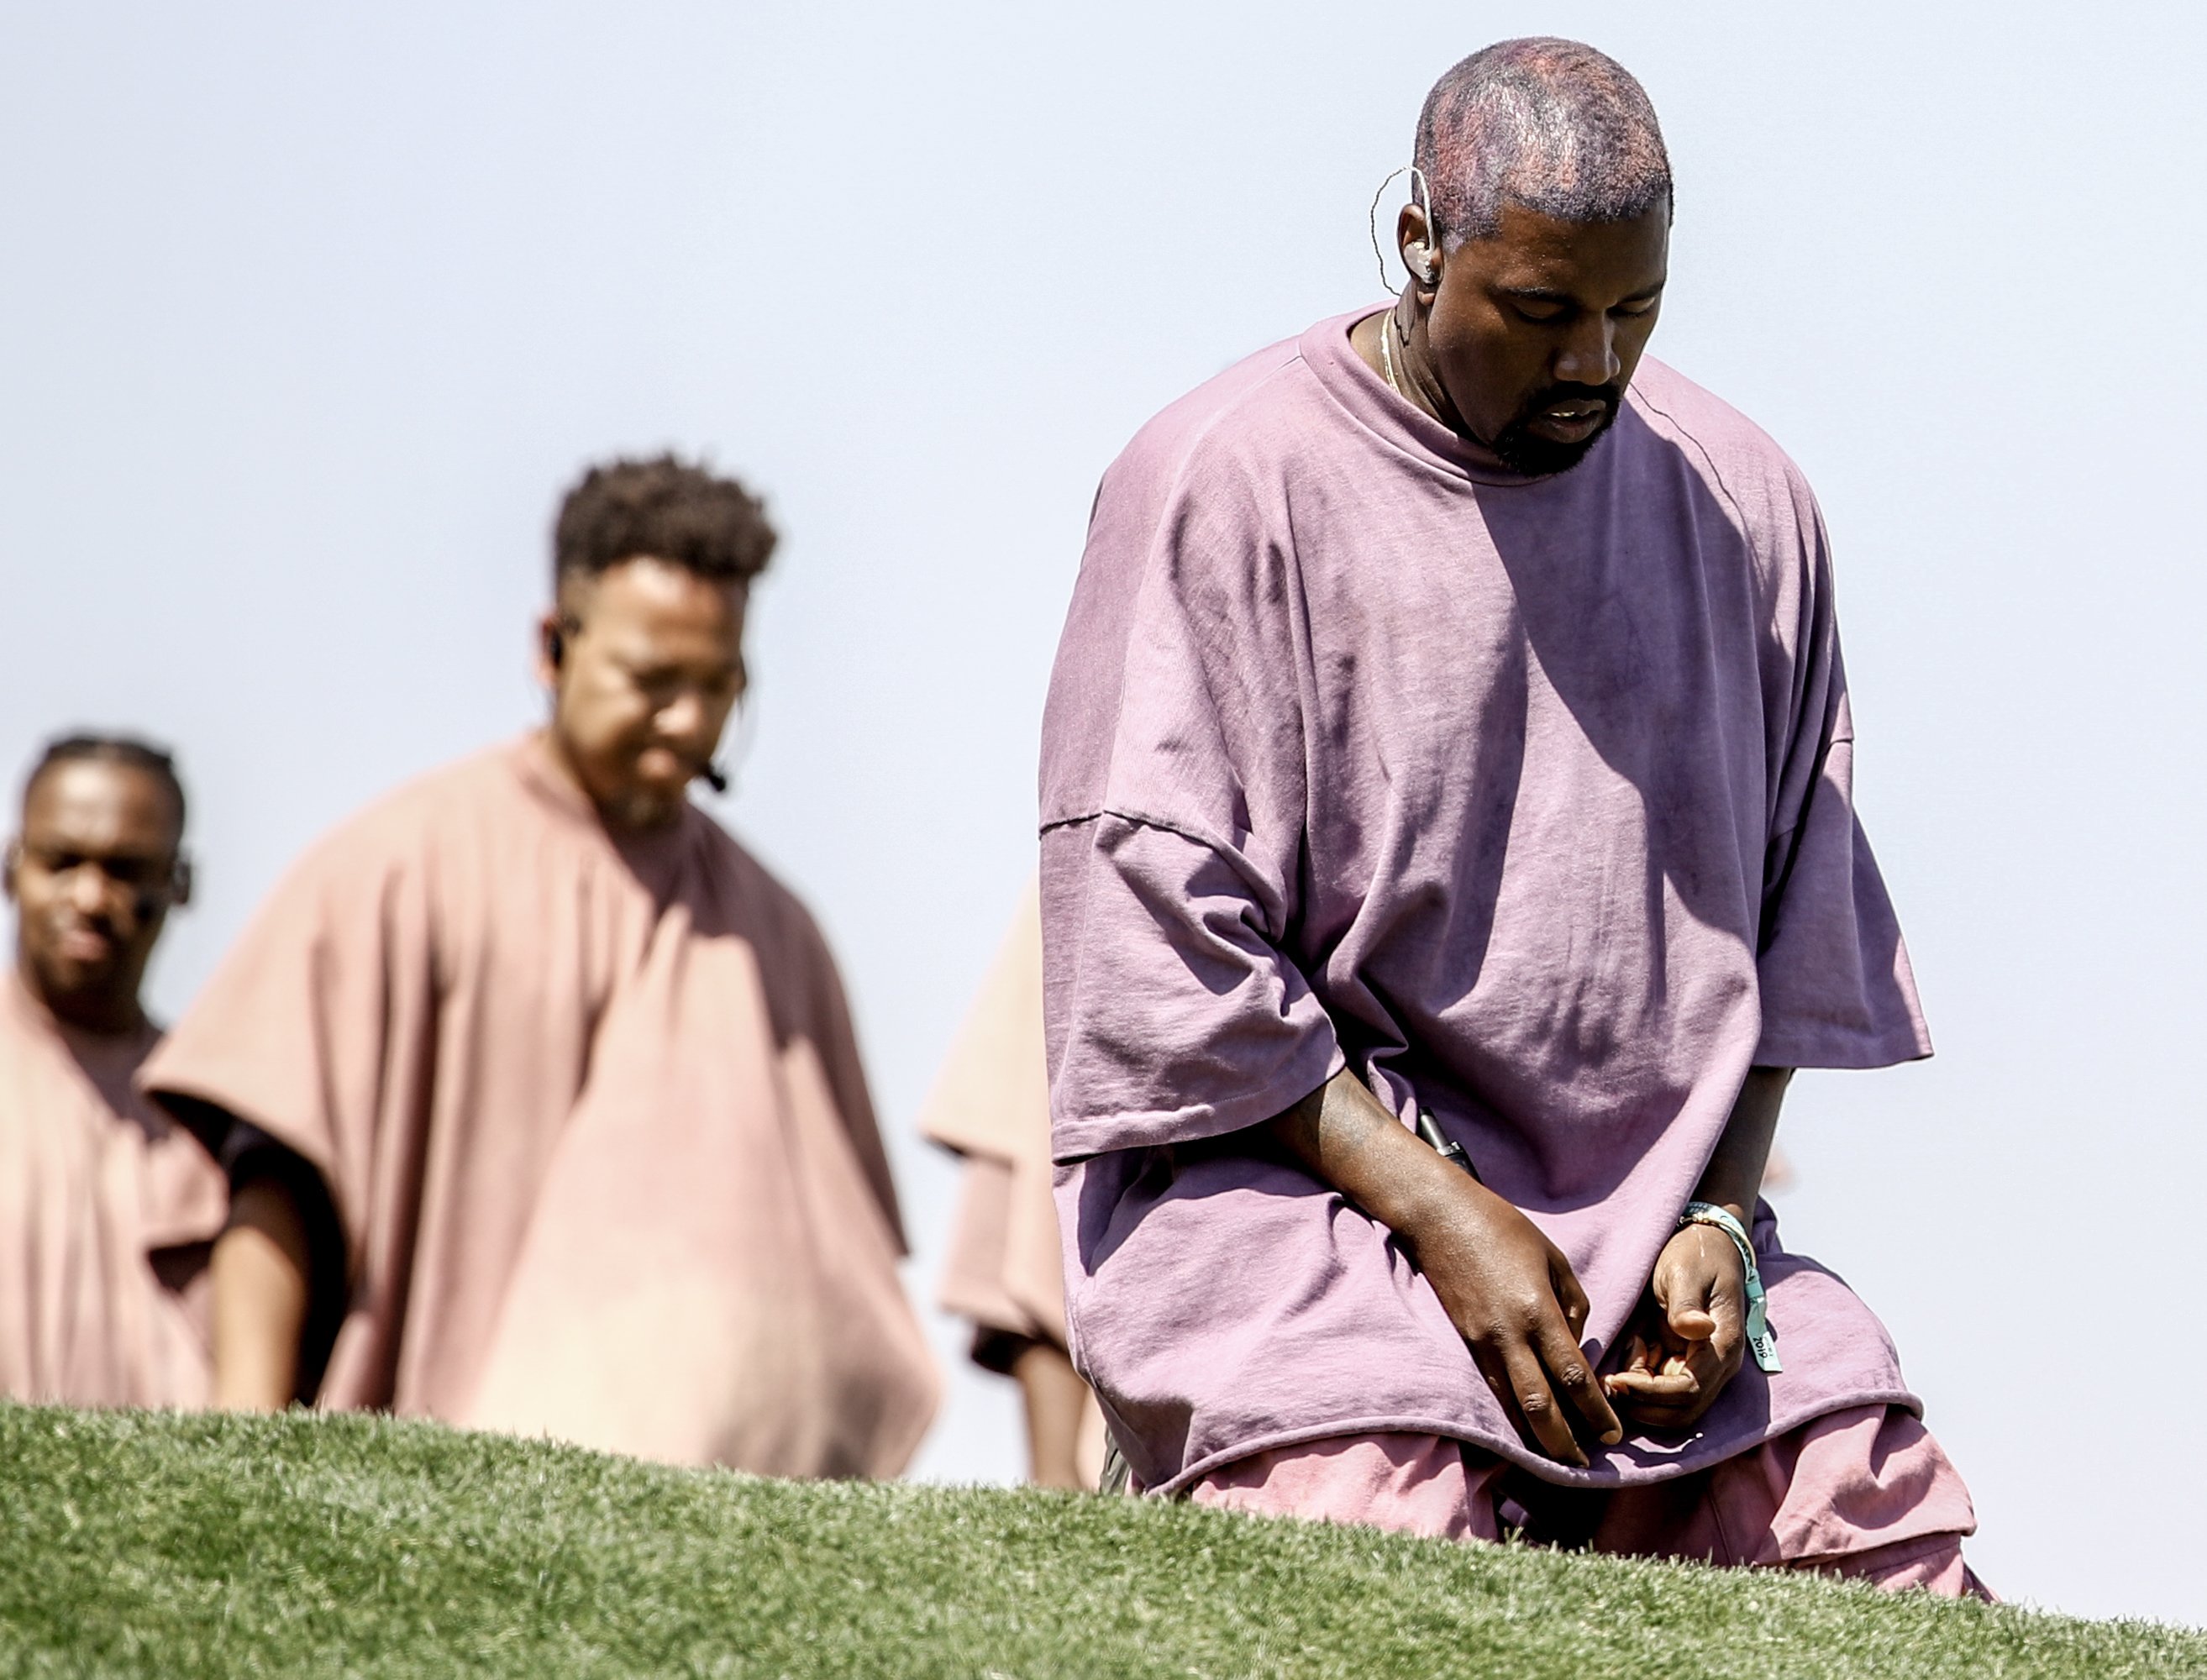 Ye of Toxic Faith: Behind the Kanye Downfall